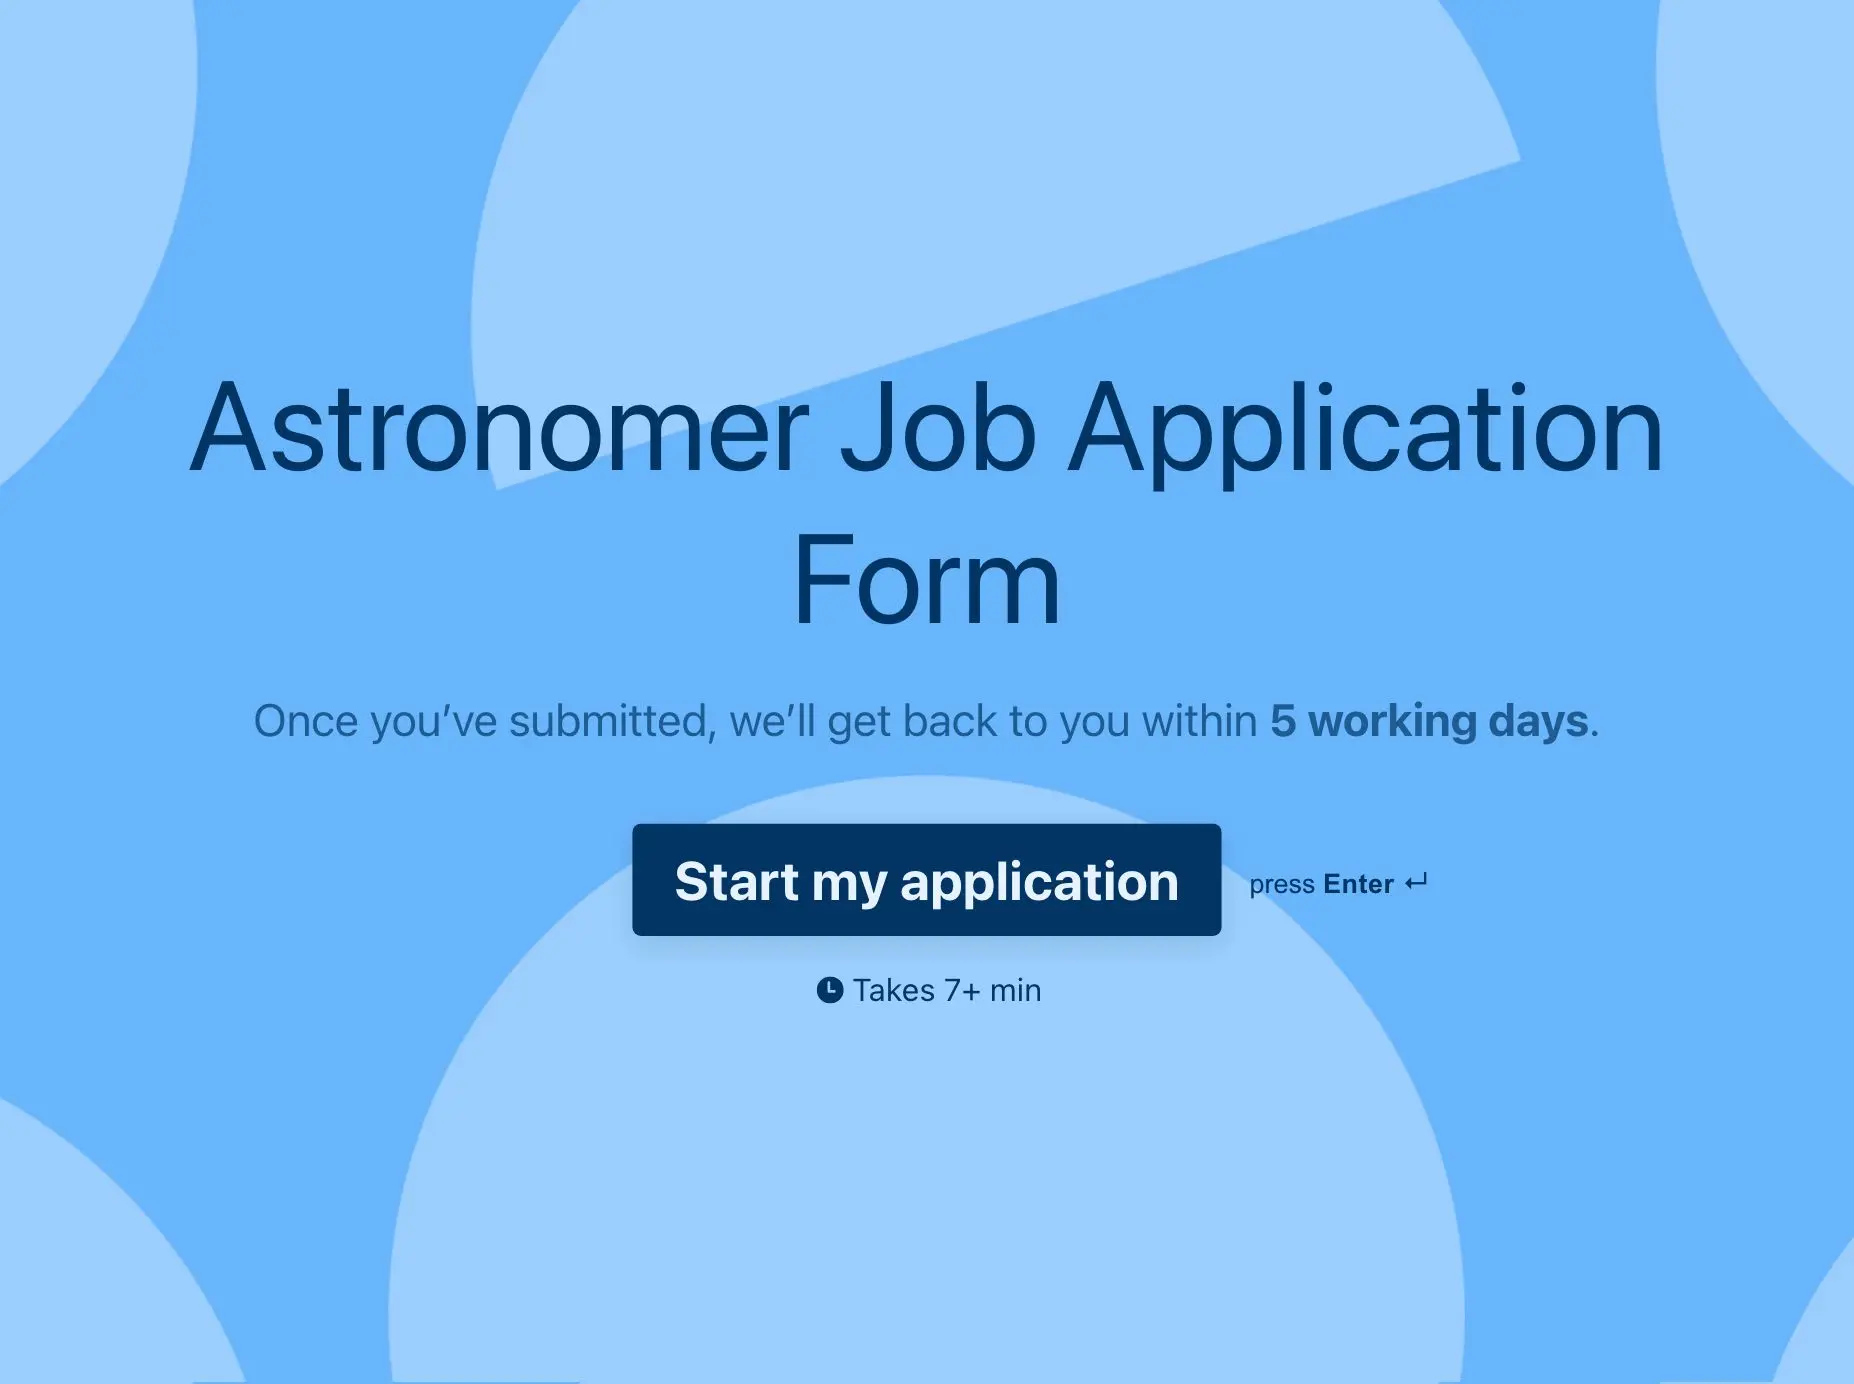 Astronomer Job Application Form Template Hero